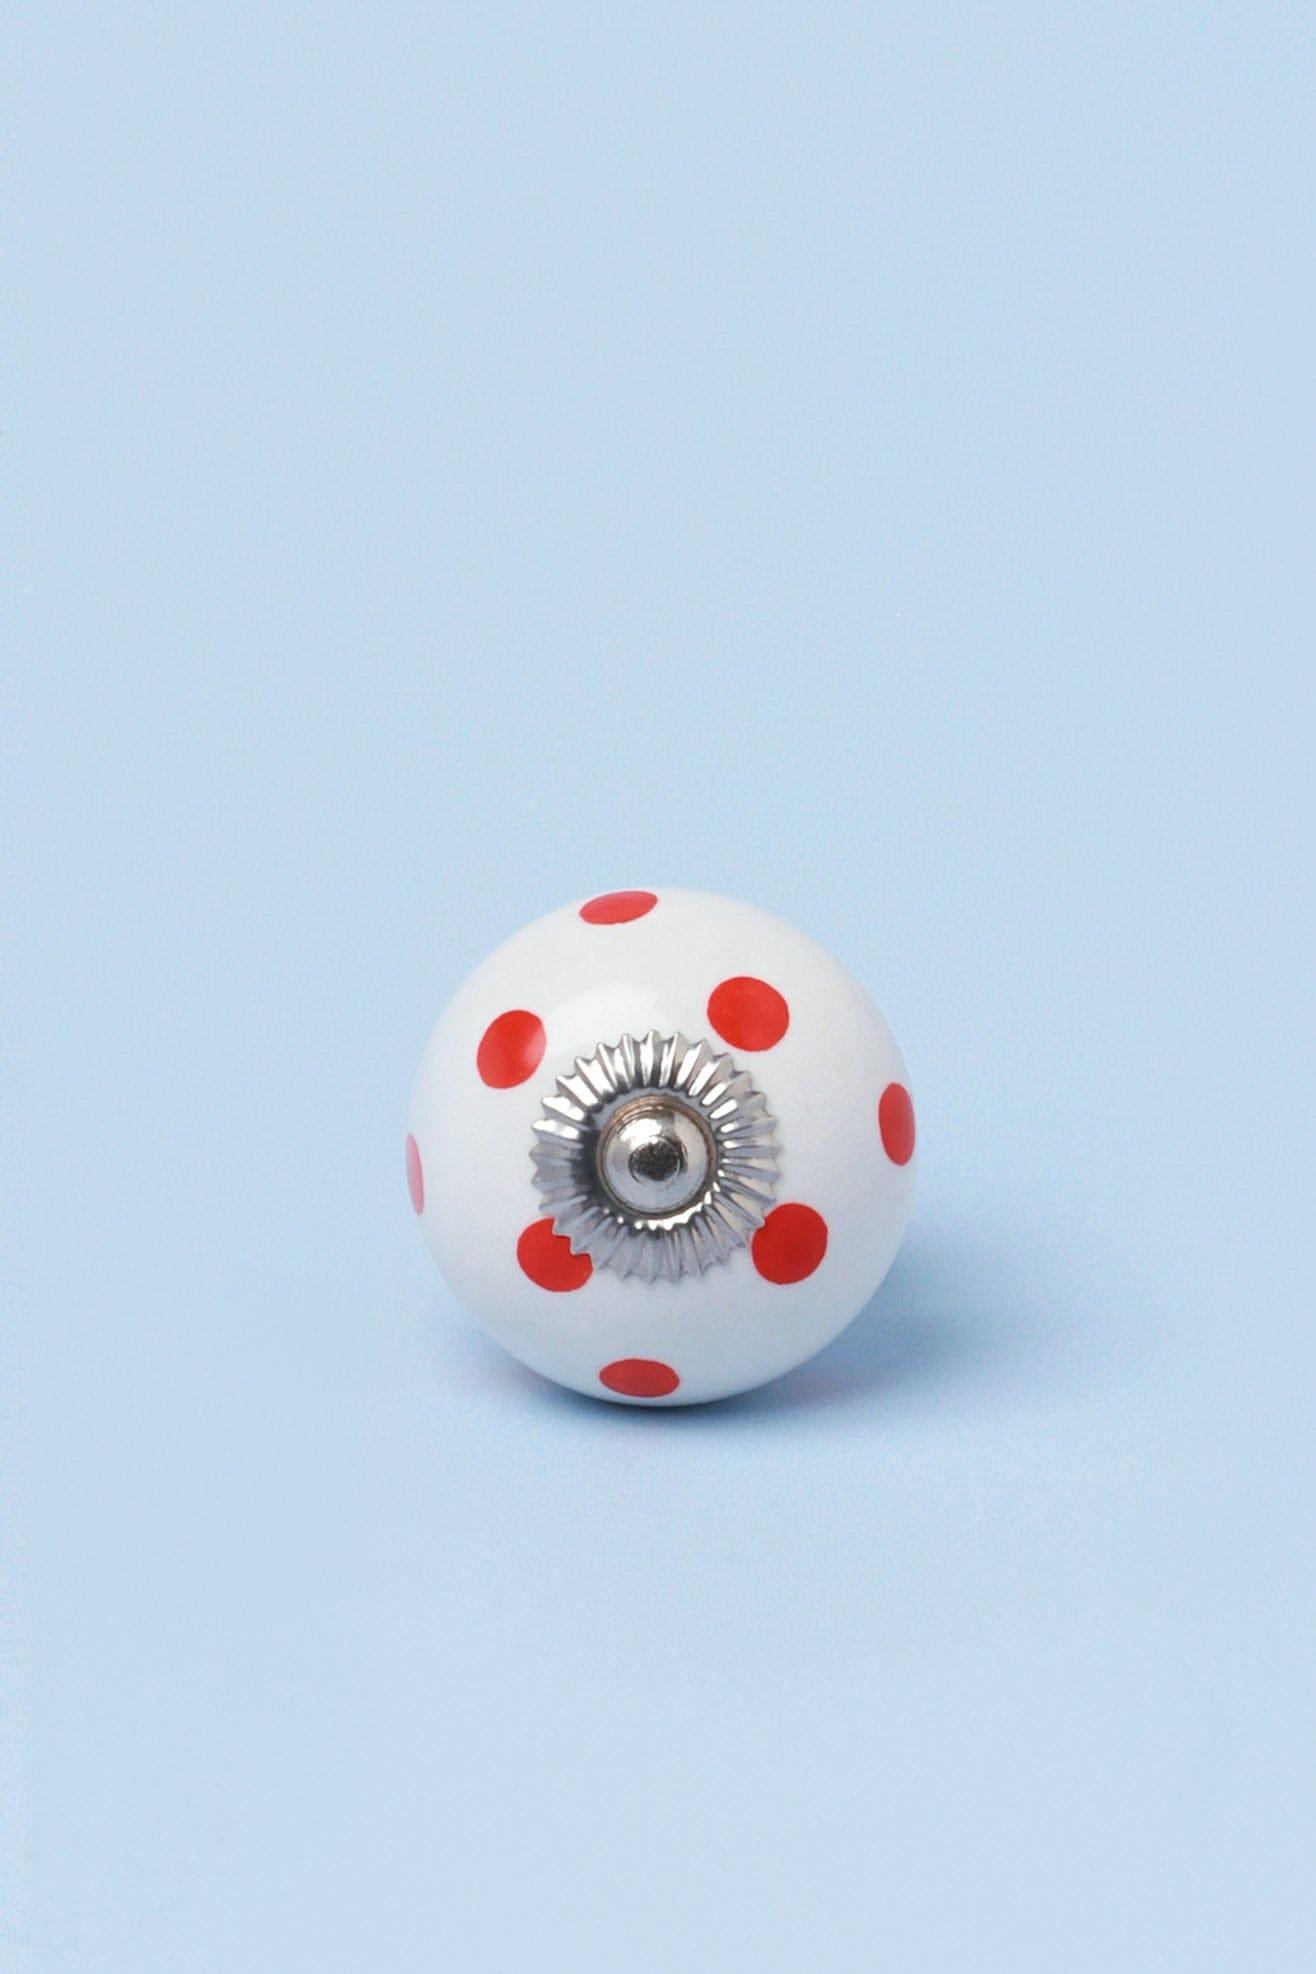 G Decor Red Polka Dot Ceramic Door Knobs Cupboard Pull Handles